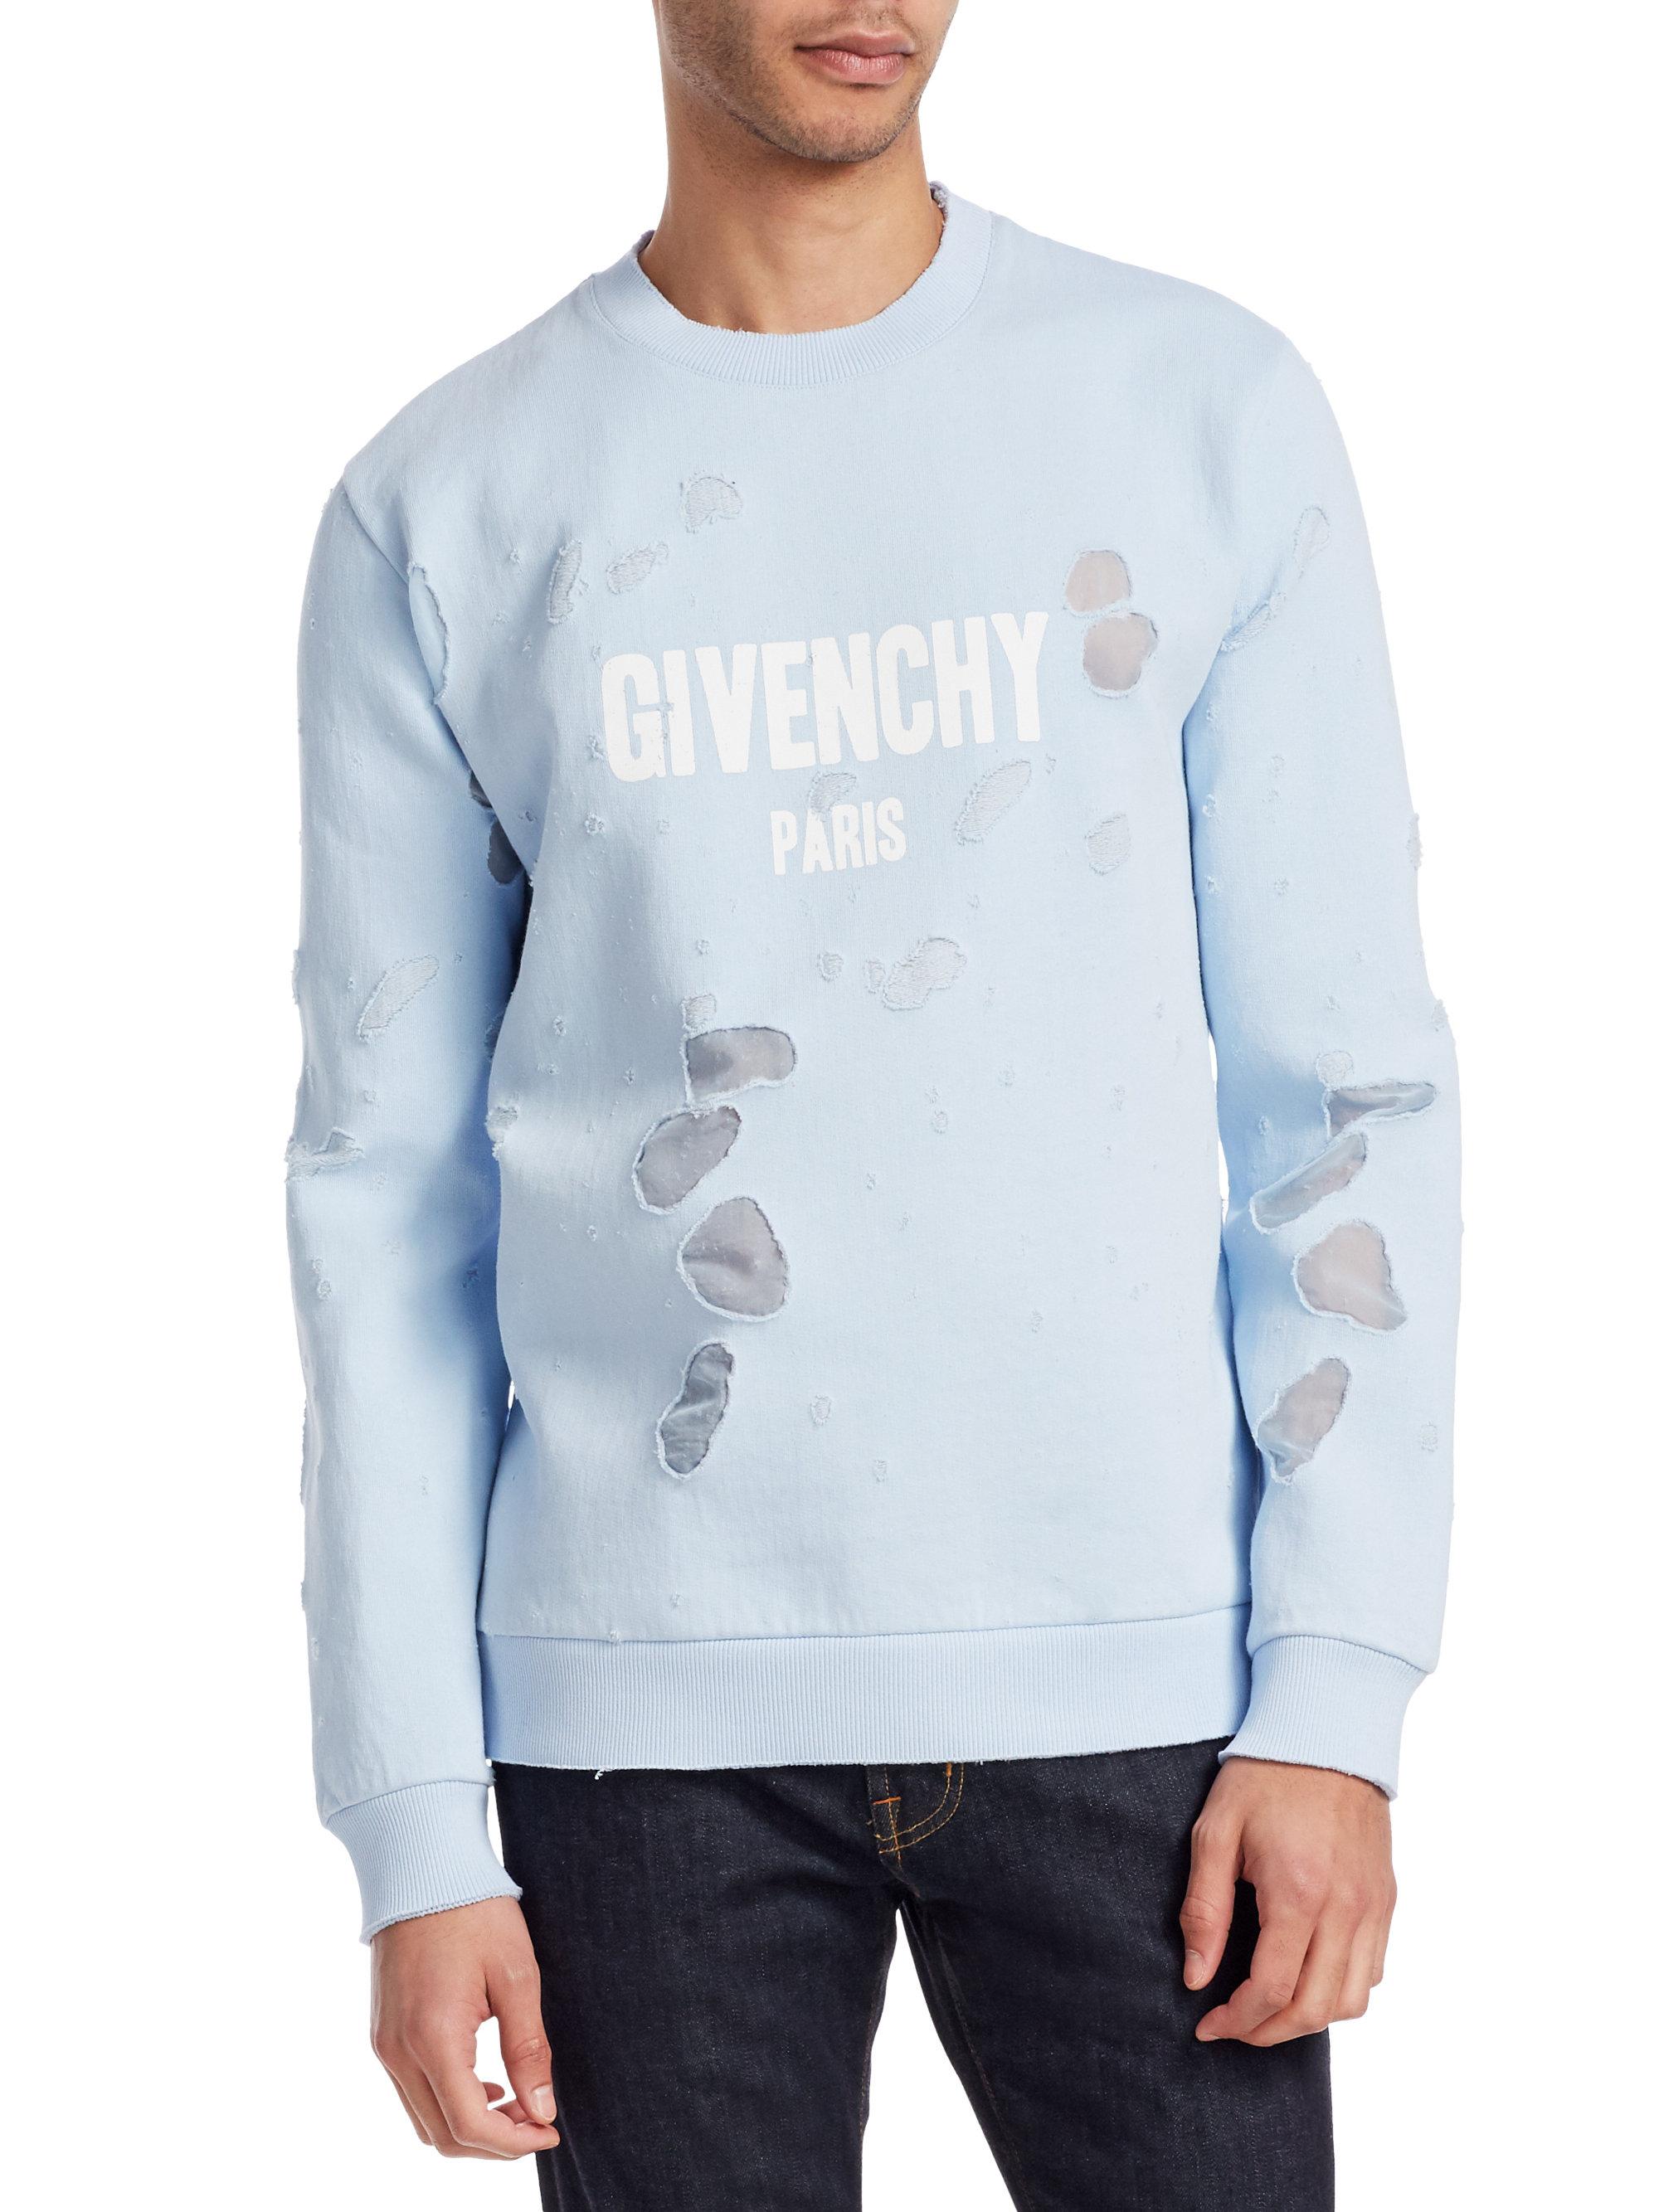 givenchy blue sweatshirt